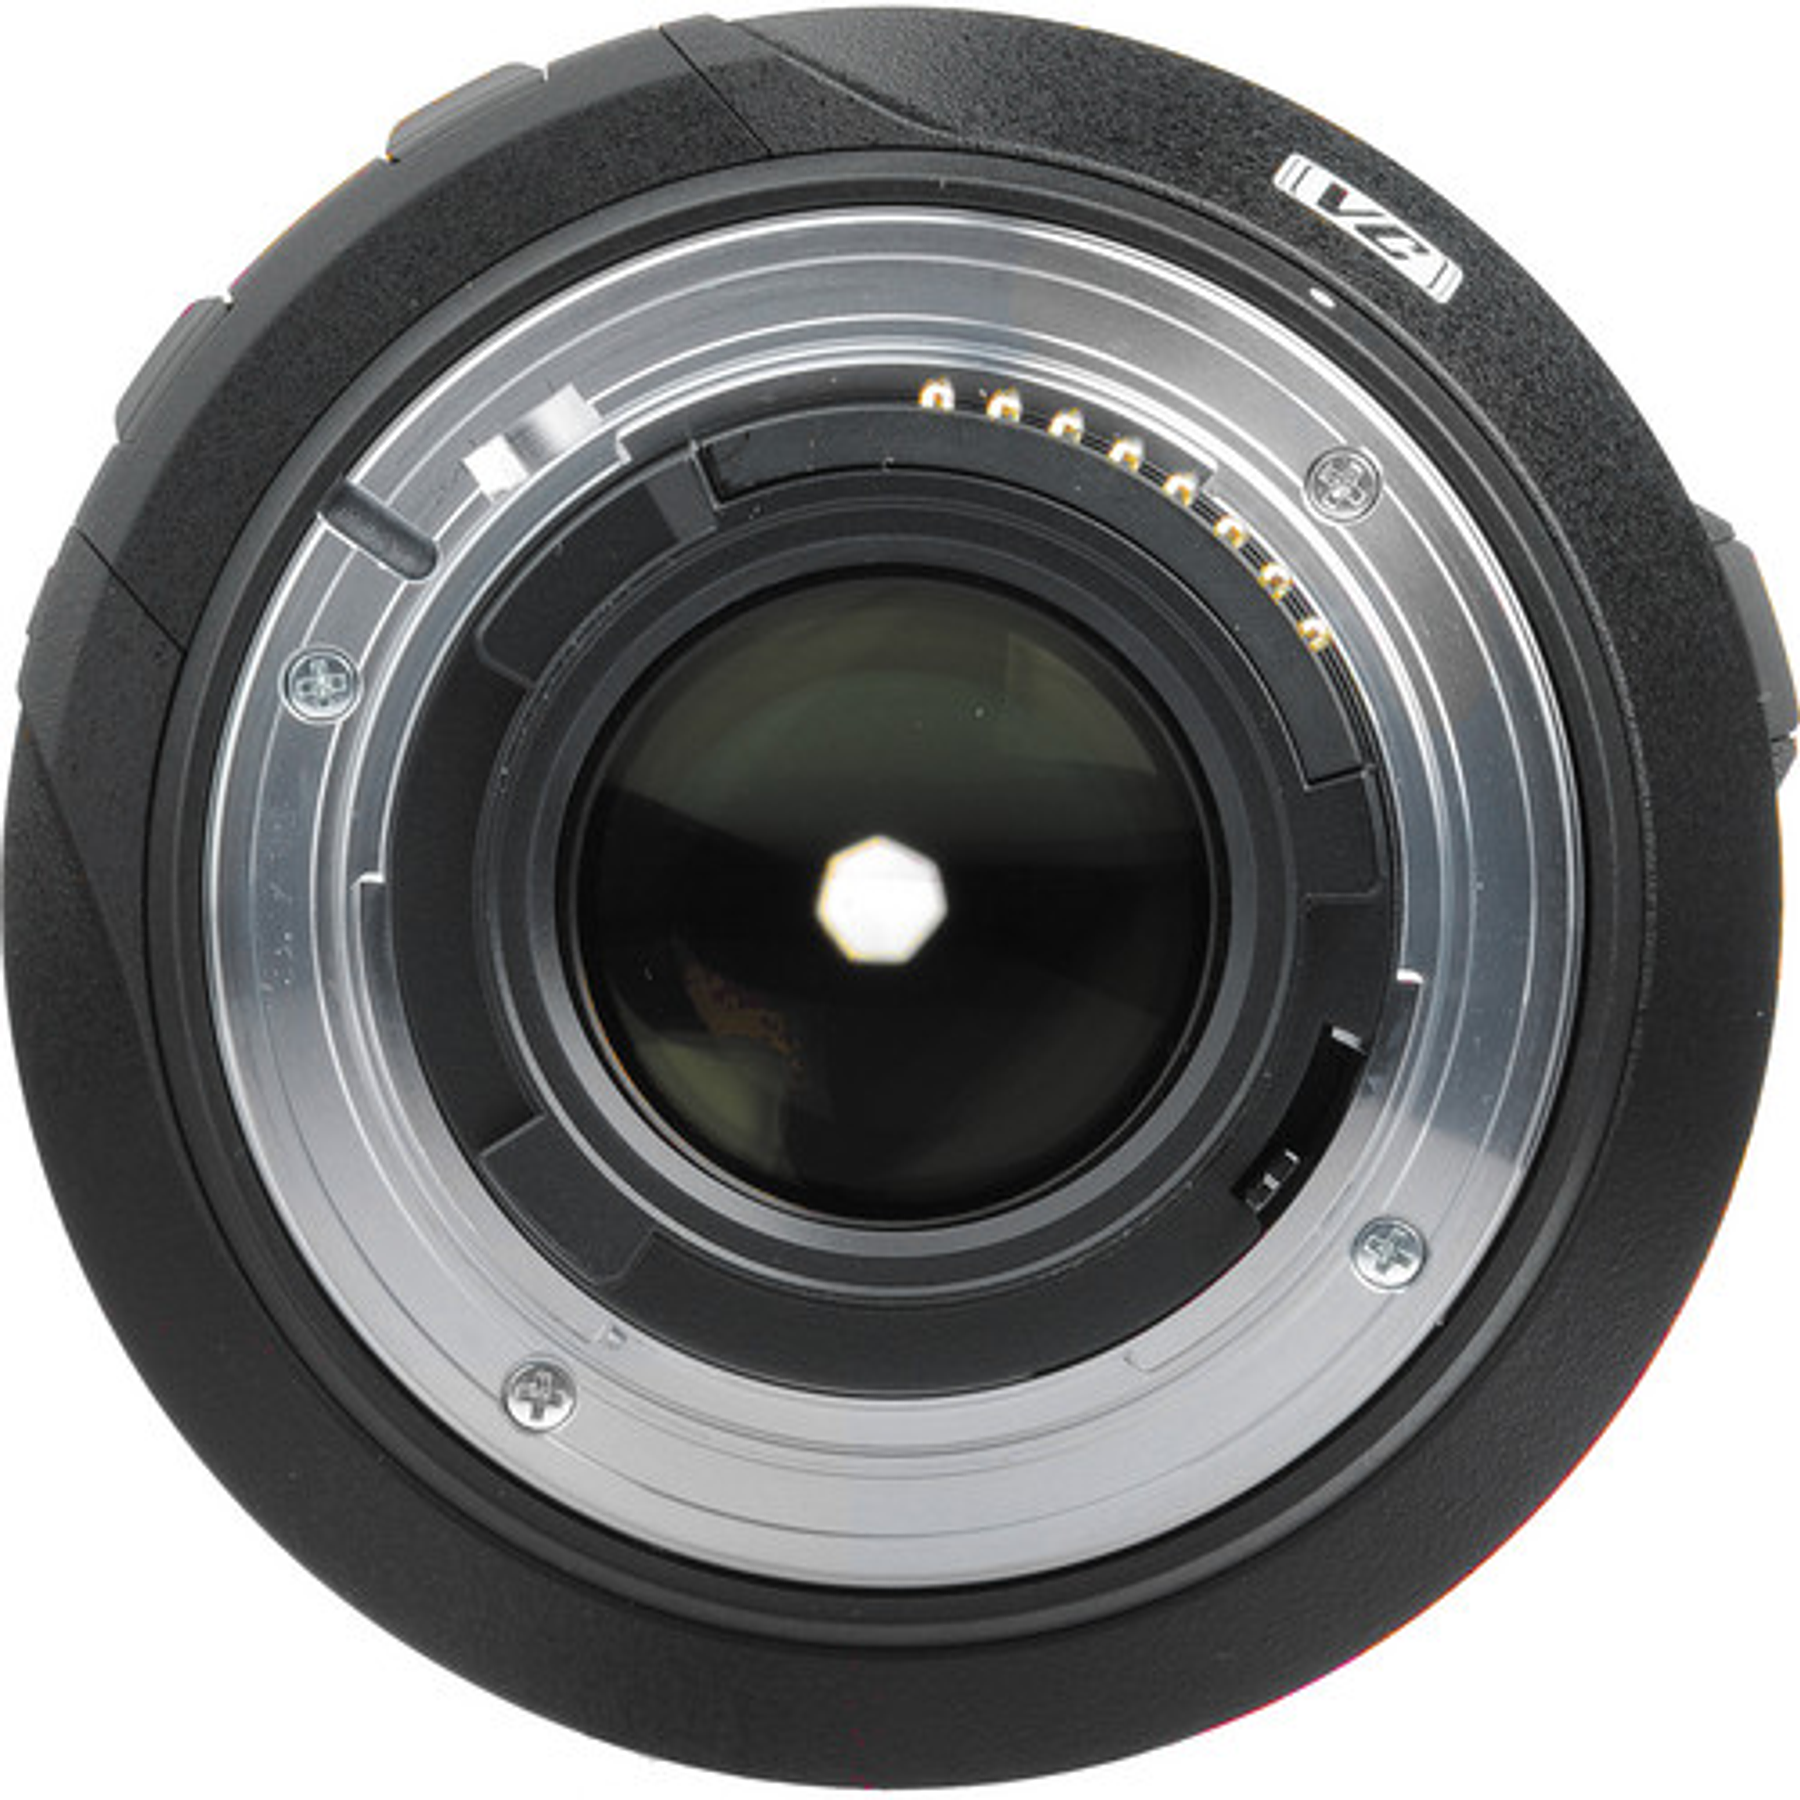 Tamron Lente SP AF17-50mm F/2.8 XR LD Aspherical (IF) para Canon/Nikon